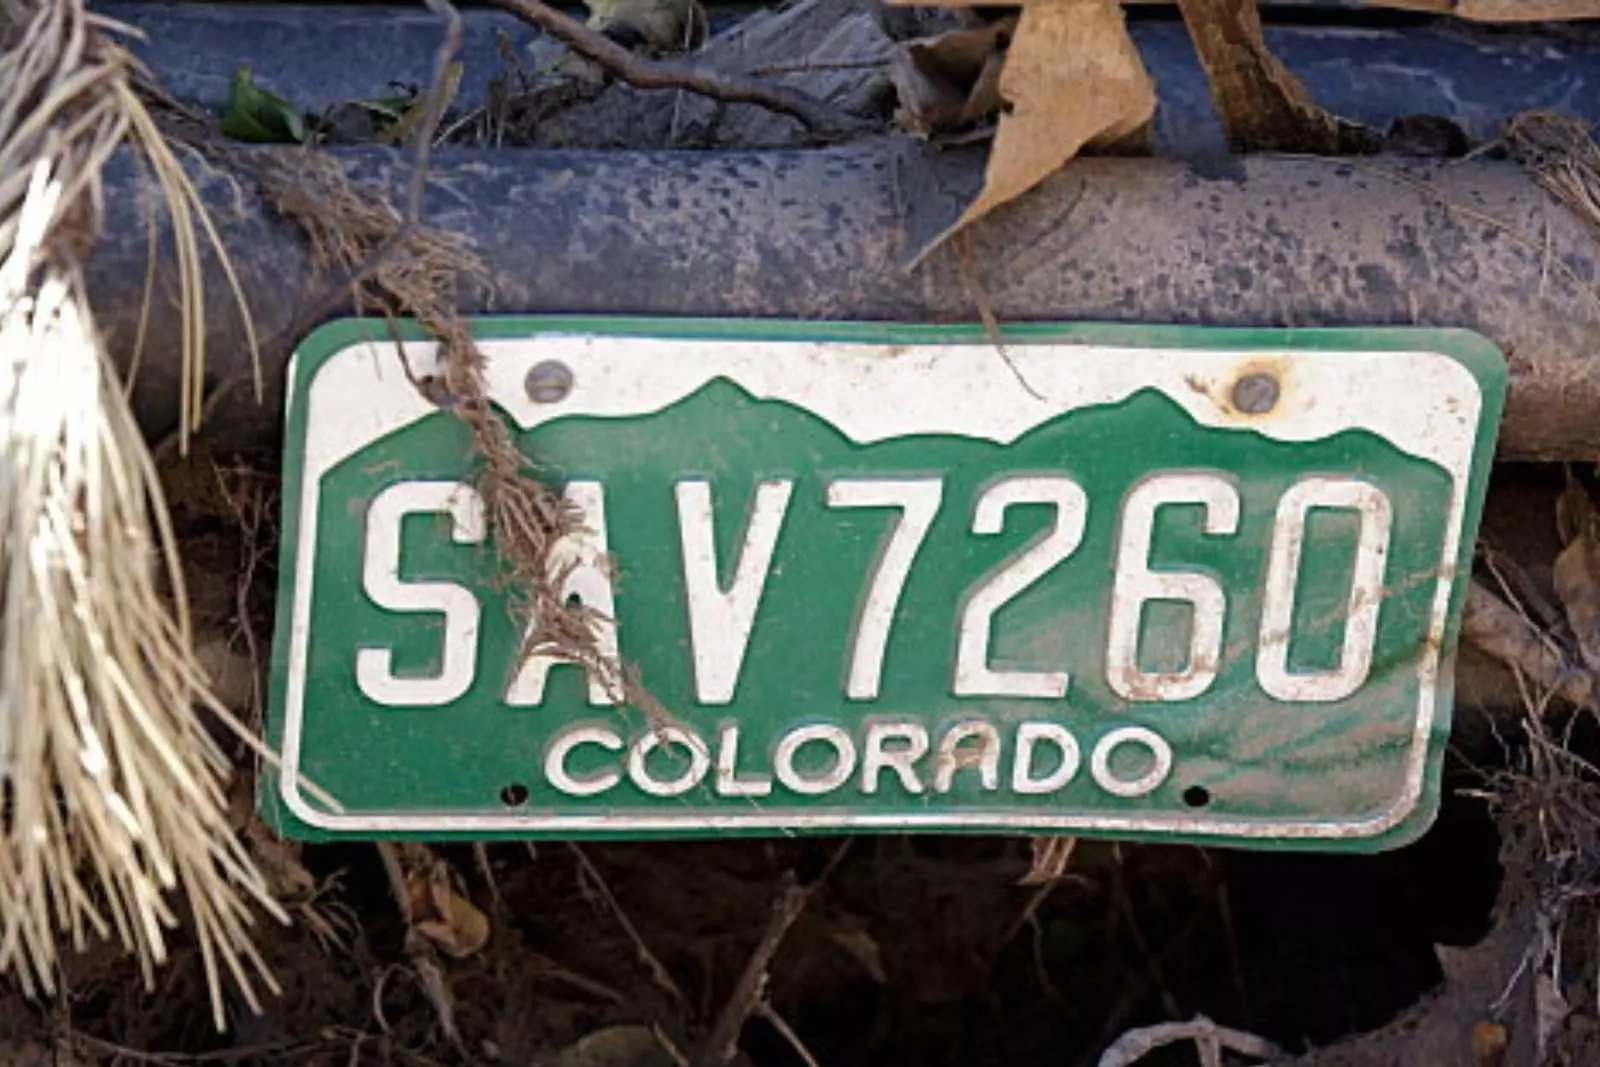 Deciphering Colorado license plates – The Denver Post